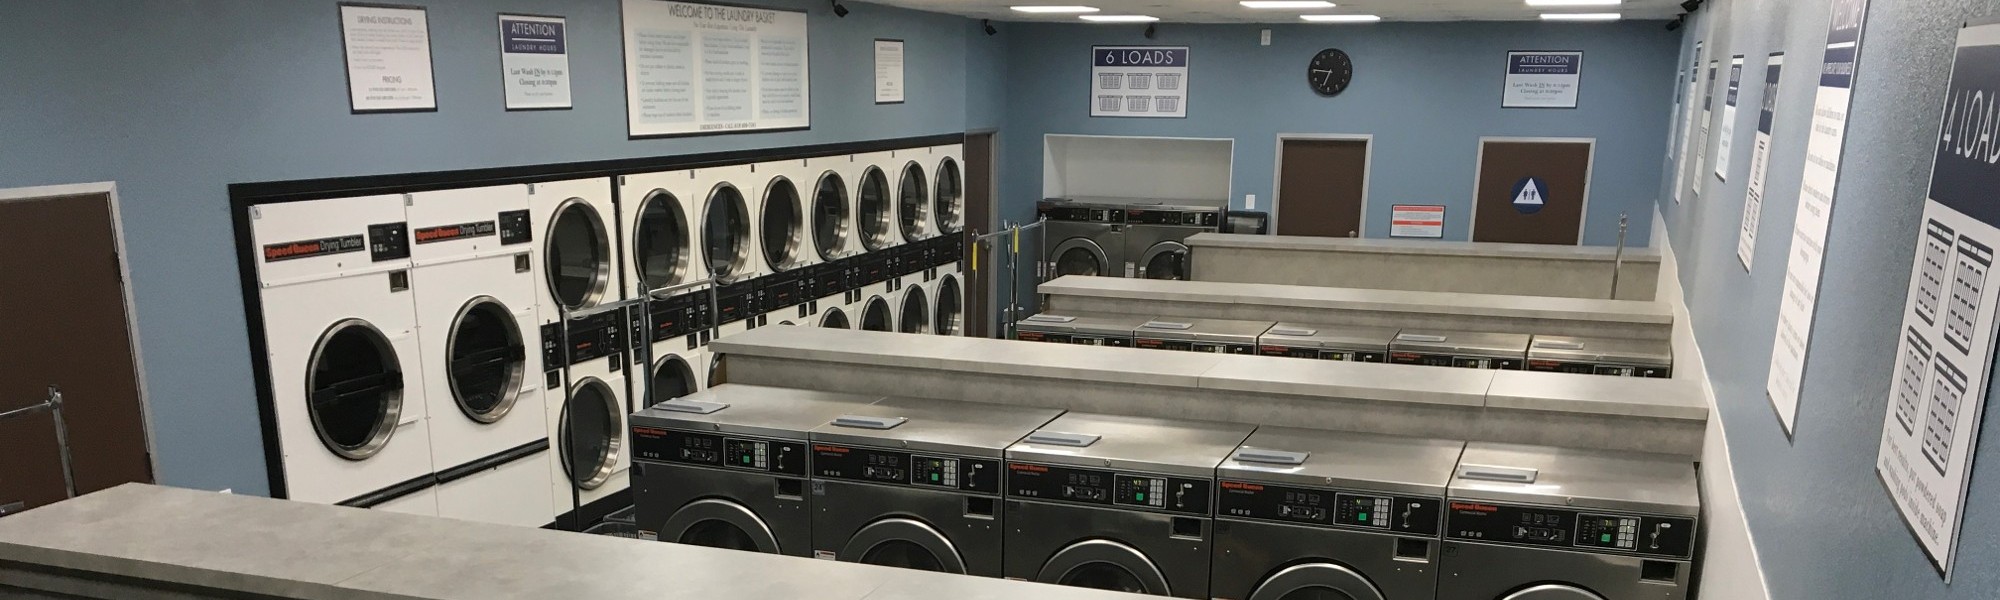 Laundromat in San Diego, CA